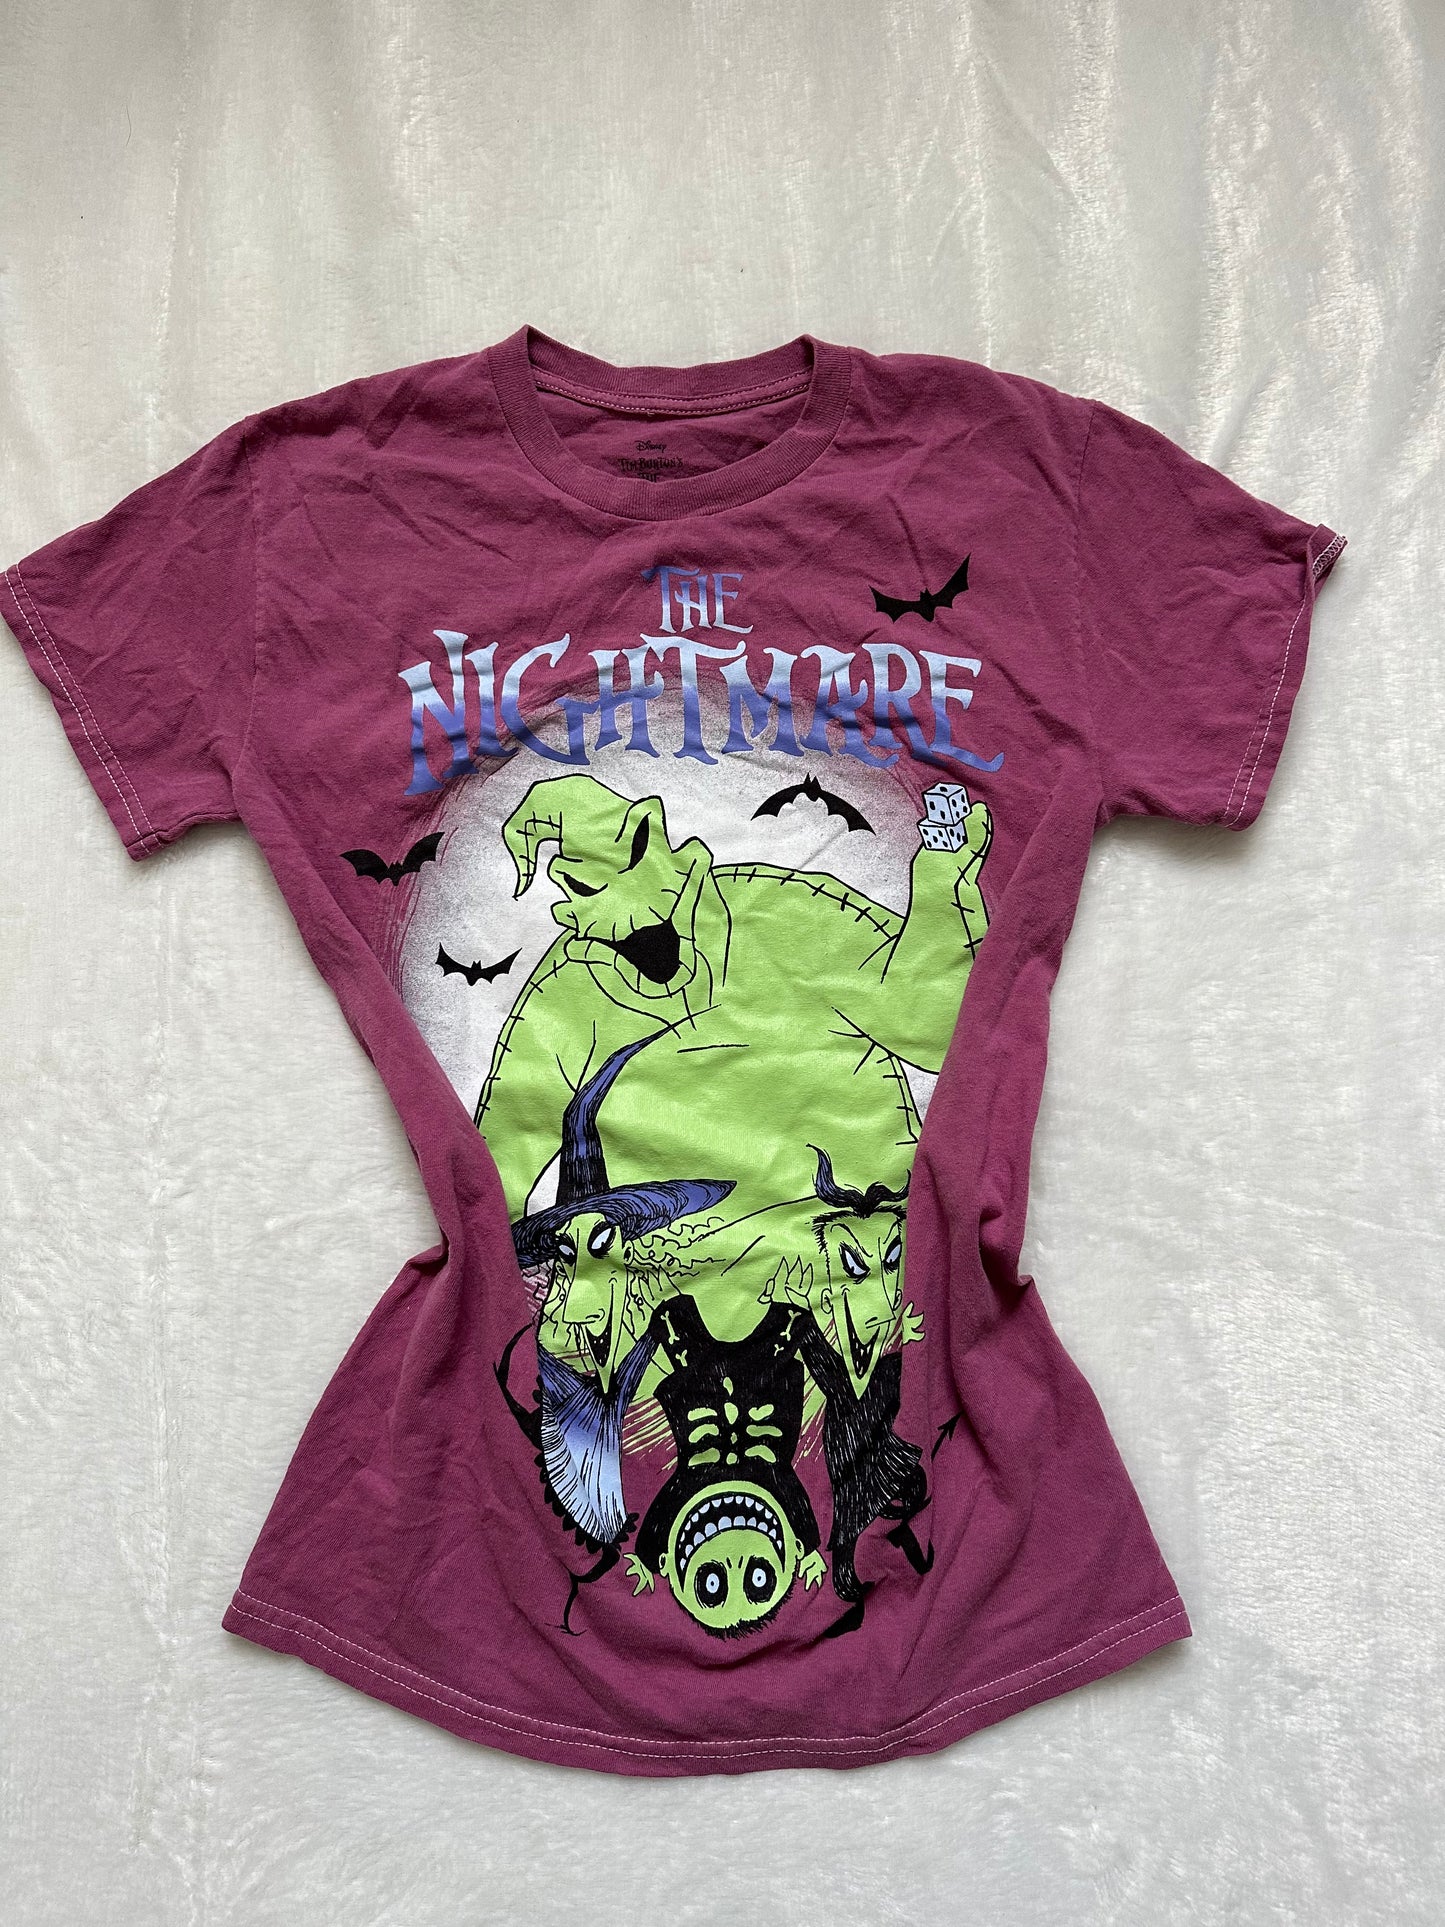 The Nightmare Before Christmas T-Shirt - Better World Thrift